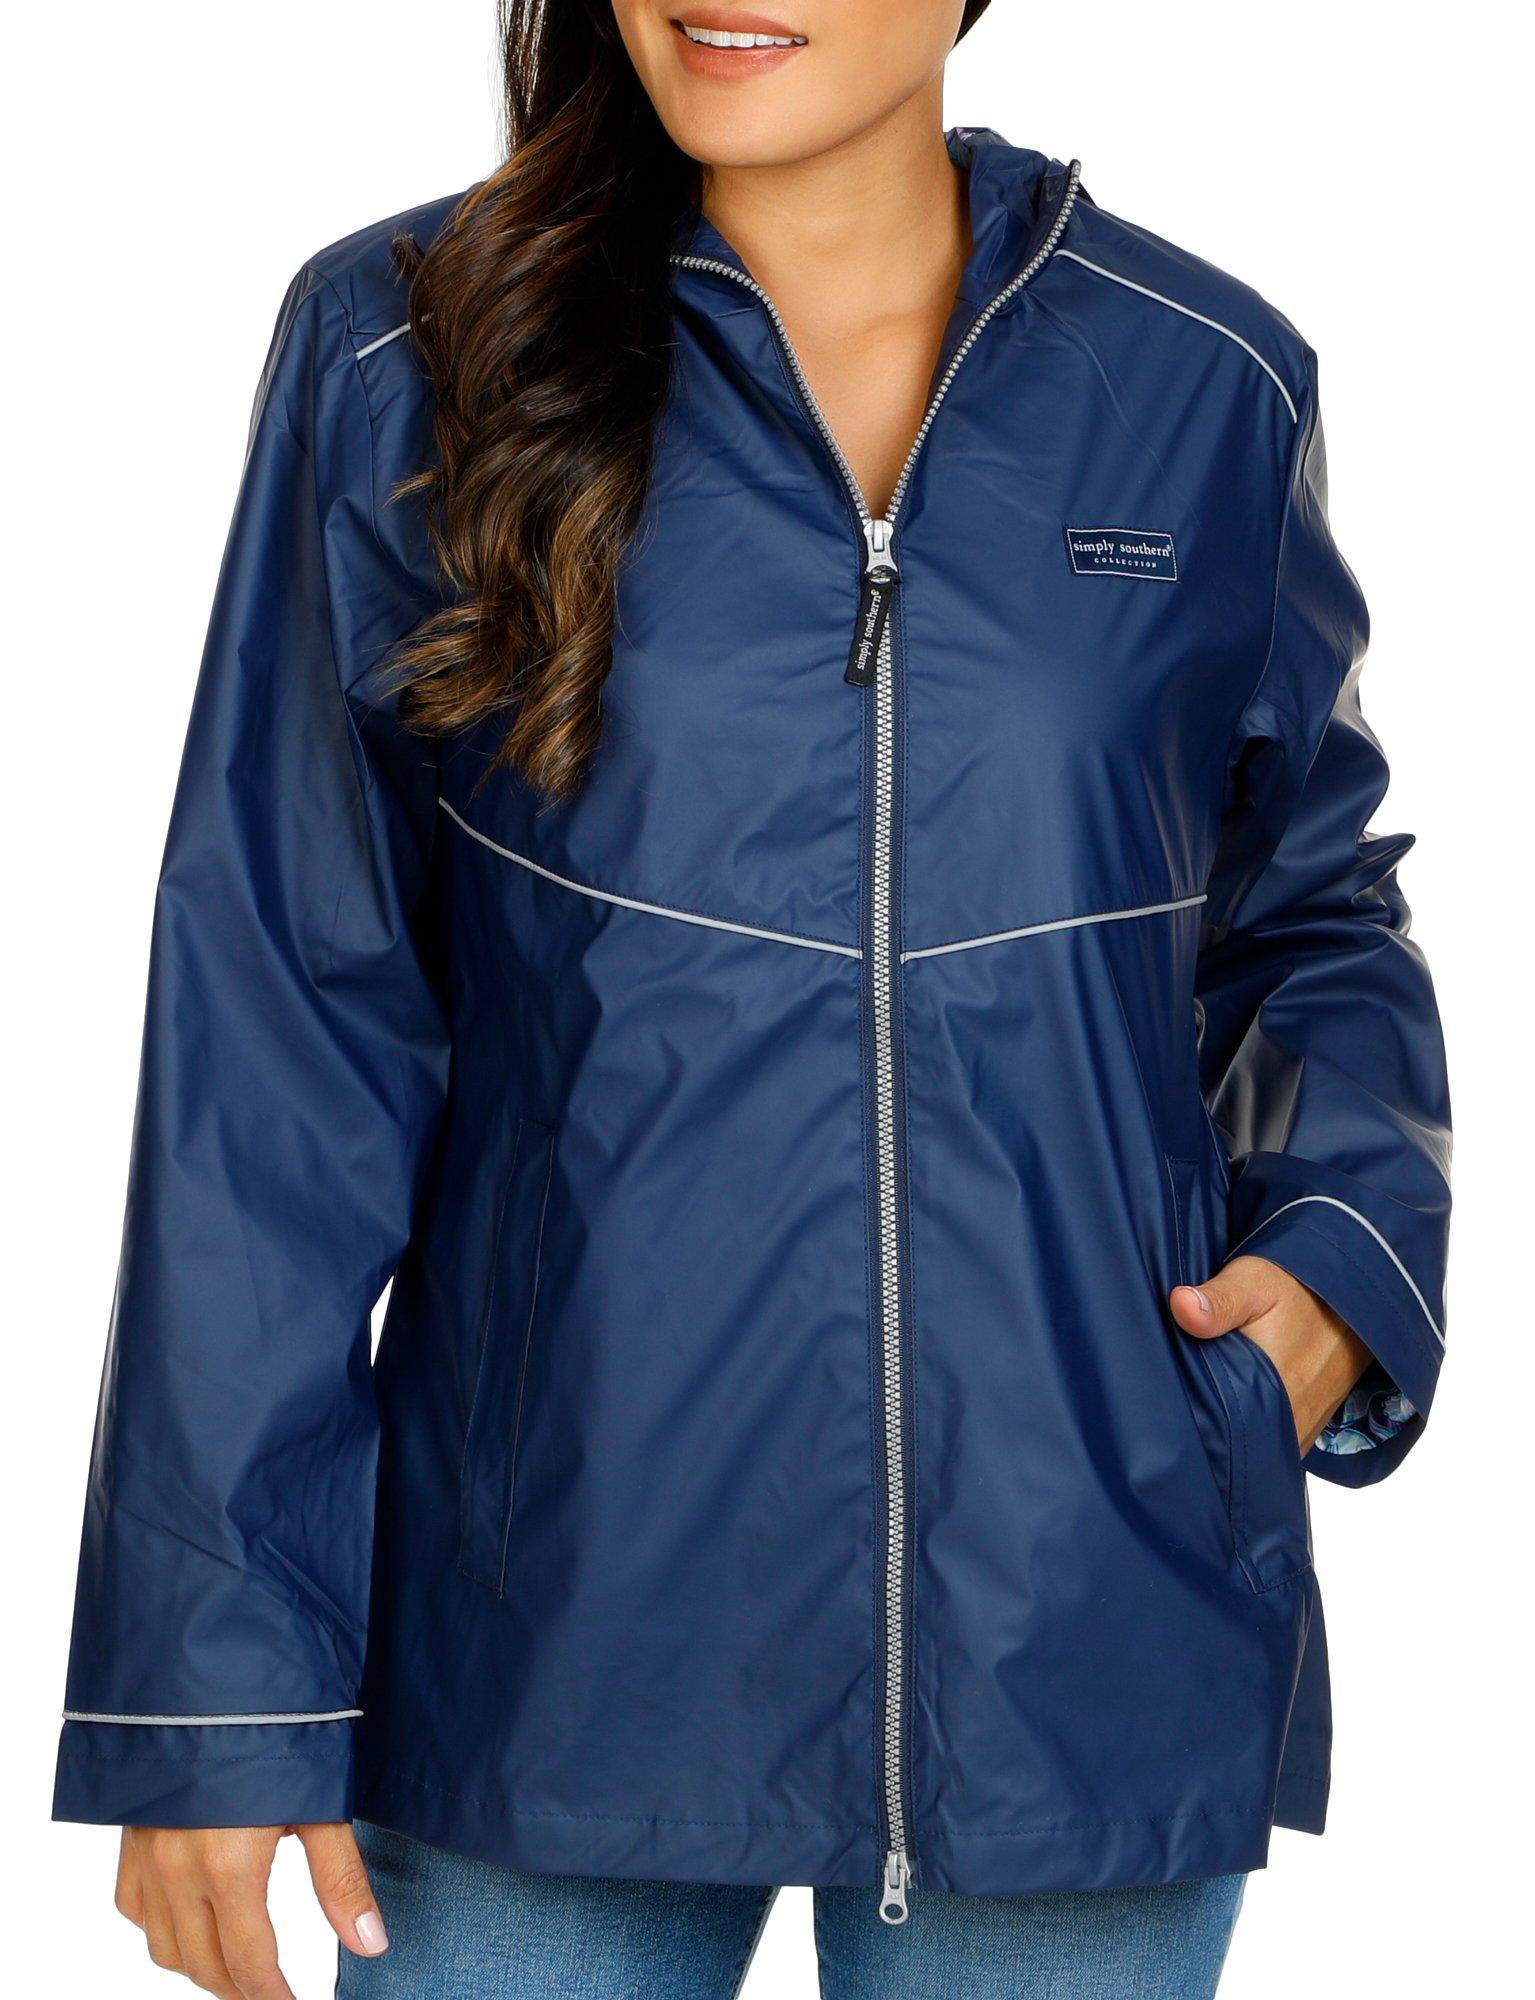 Women's Solid Rain Jacket